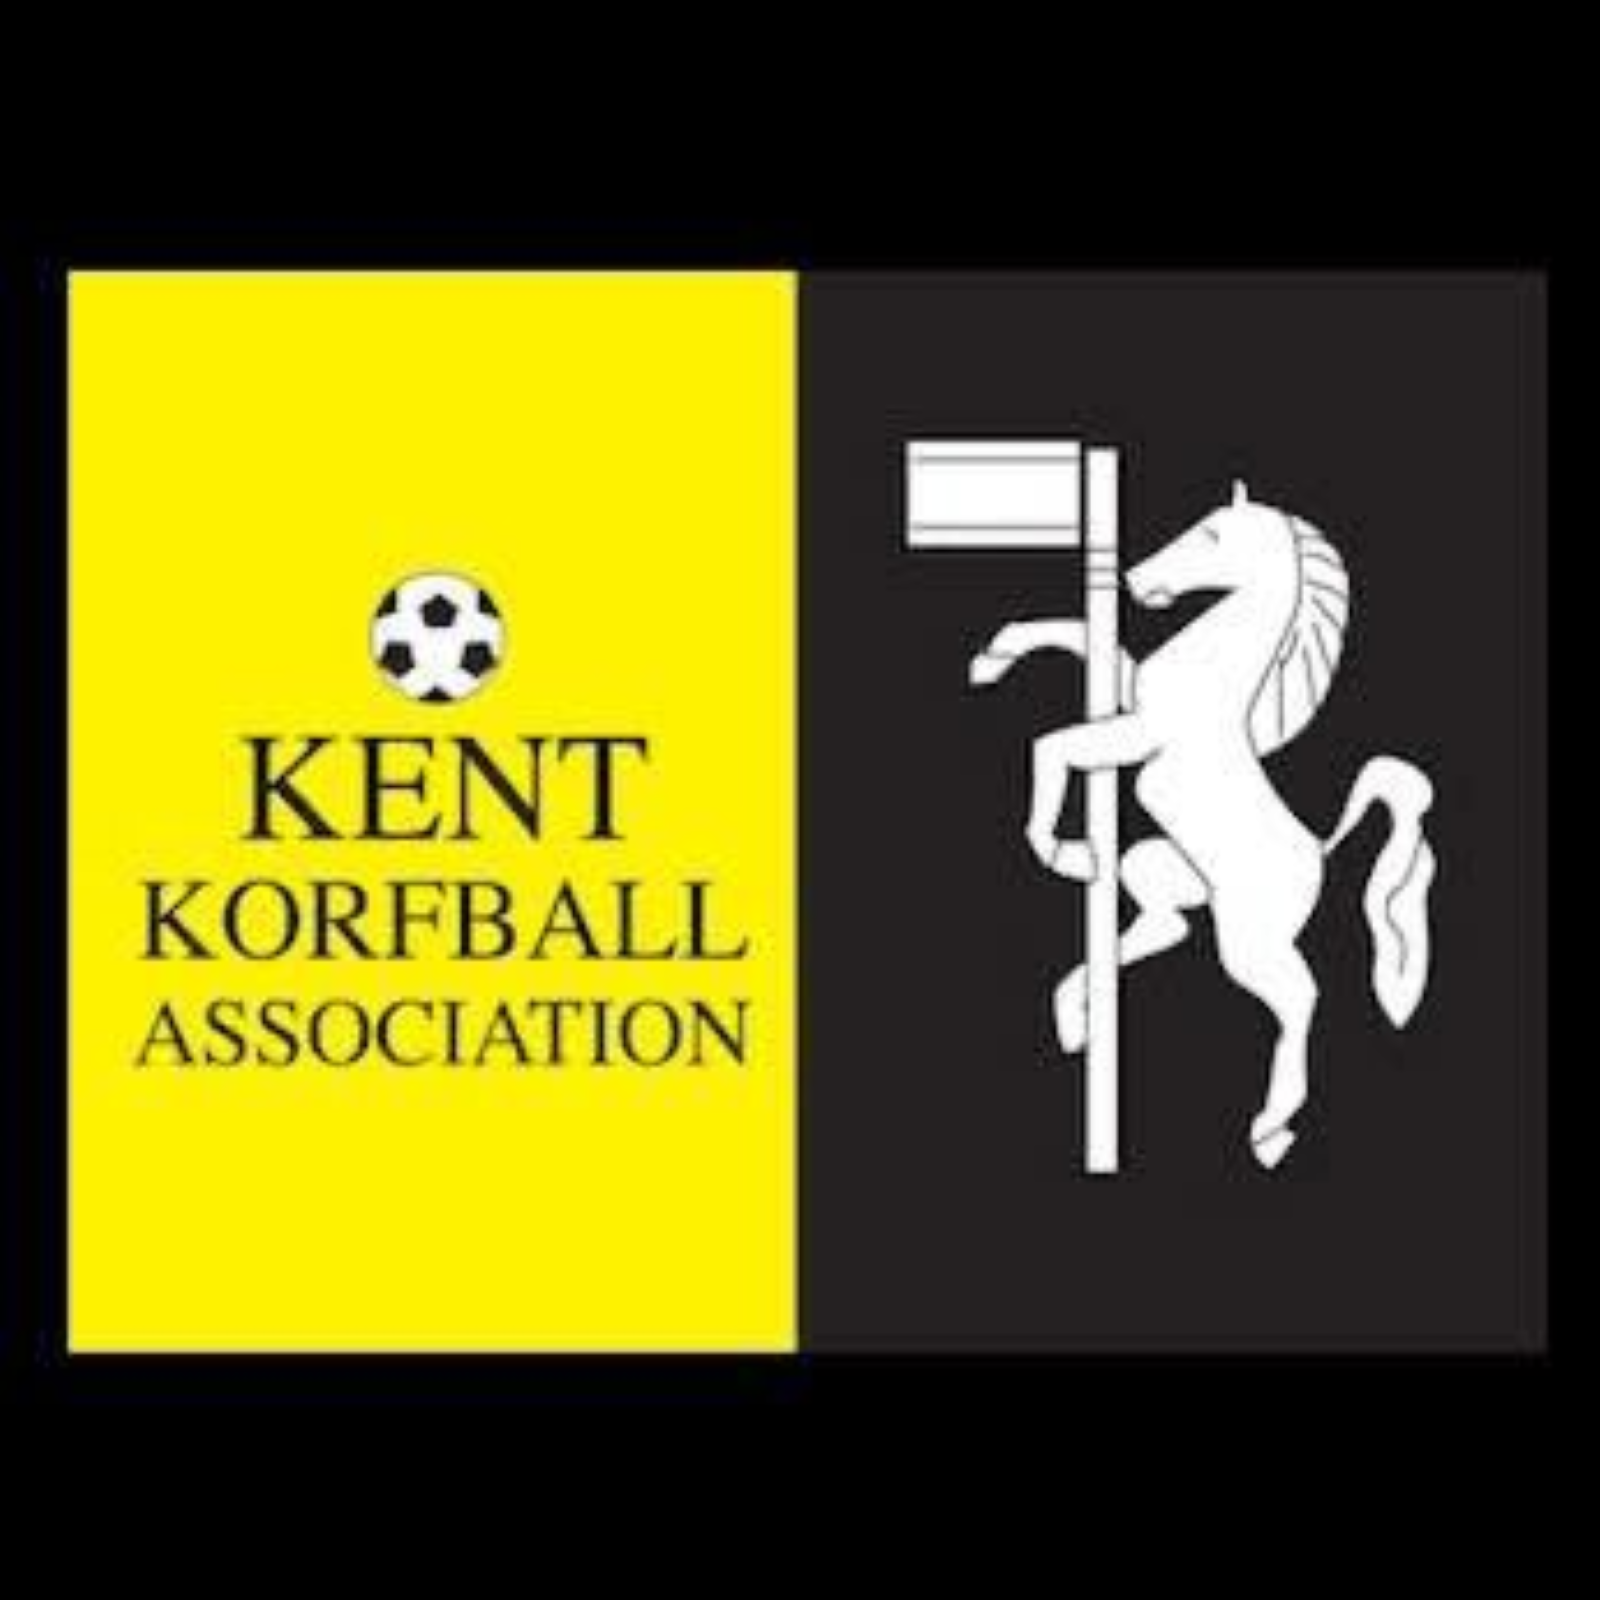 Kent Korfball League community image